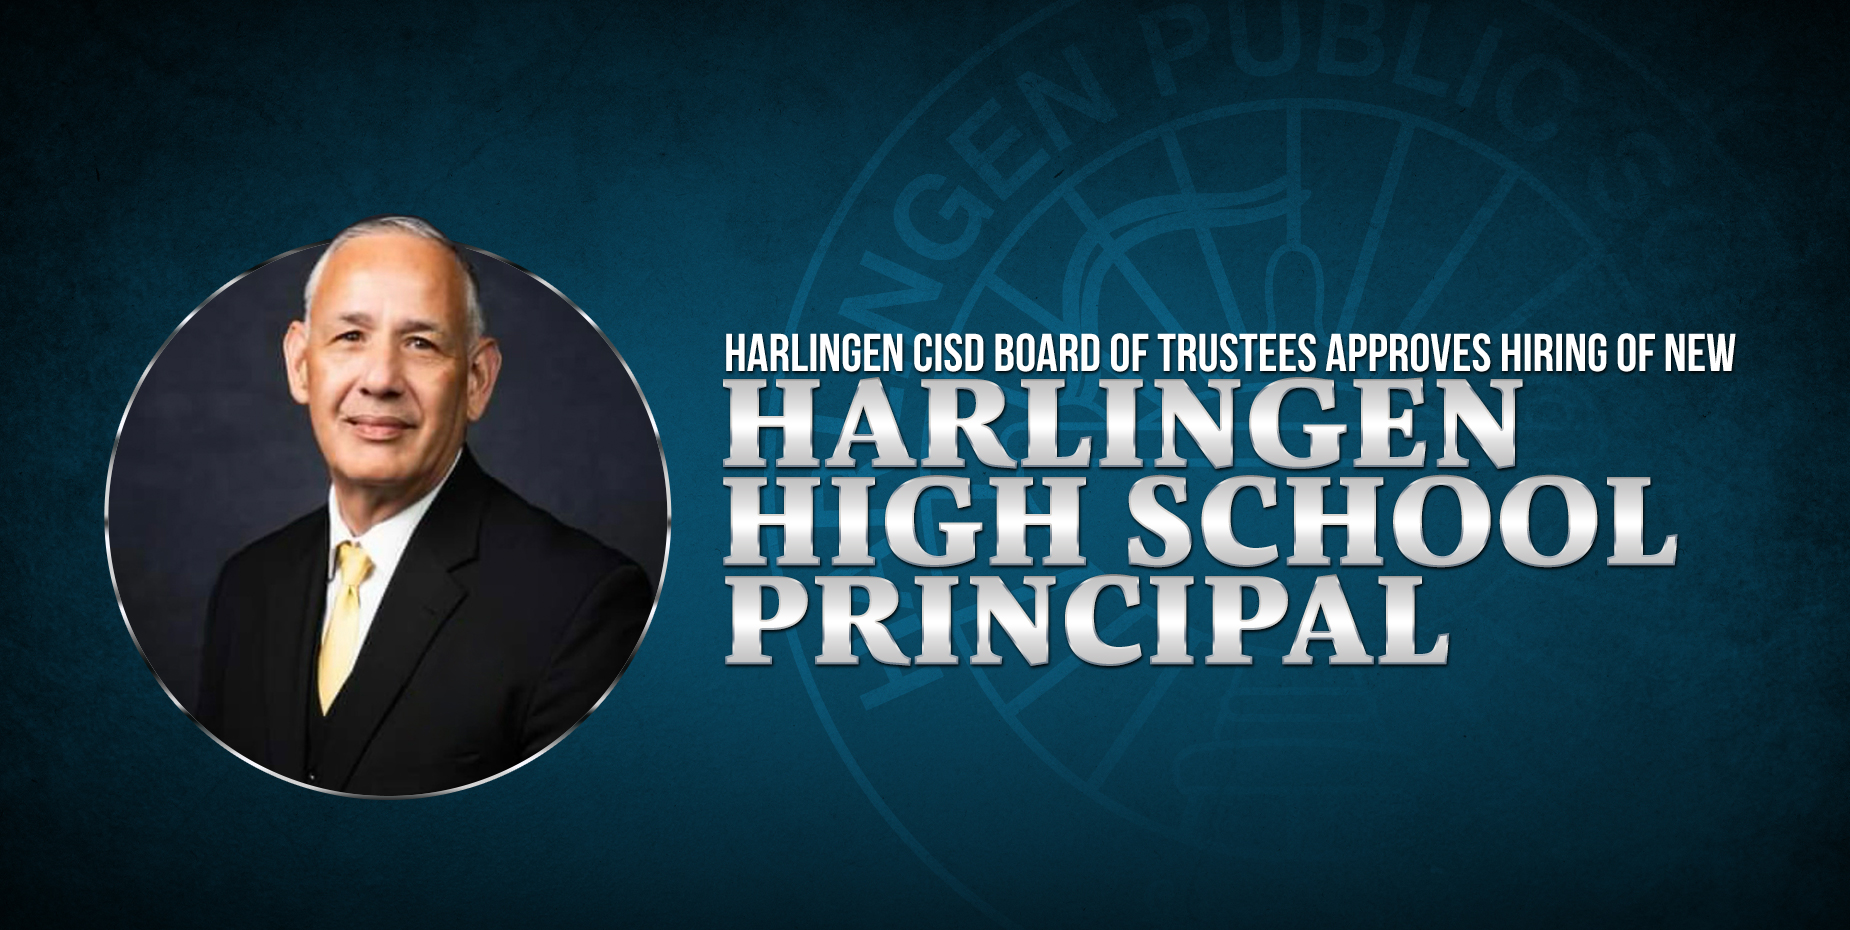 Harlingen CISD Board of Trustees approve hiring of new Harlingen High School Principal